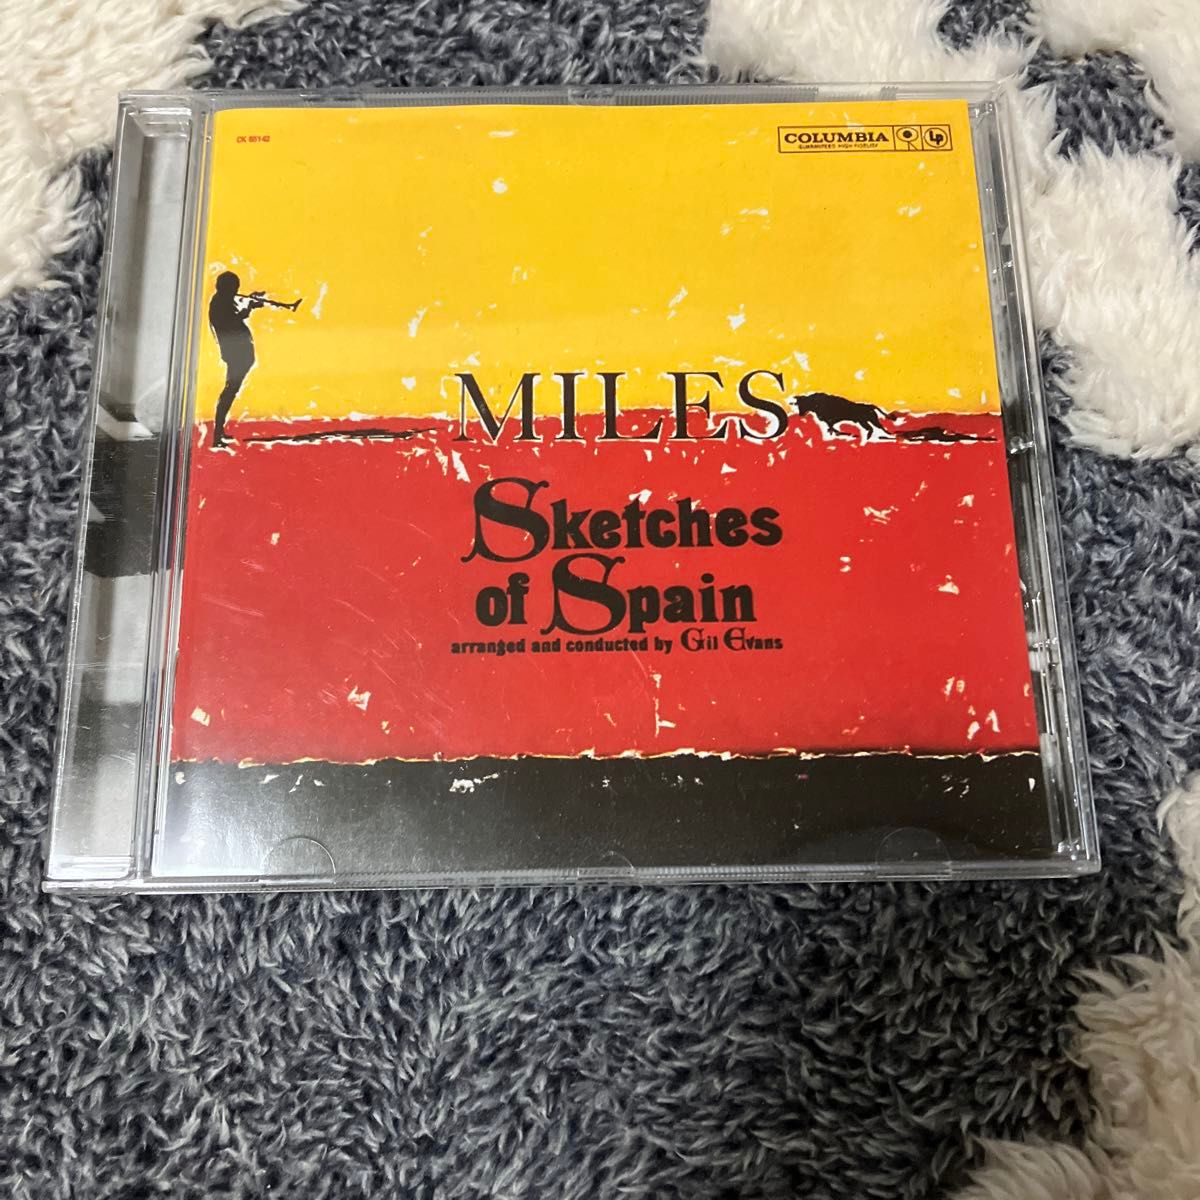 Miles Davis SKETCHES OF SPAIN